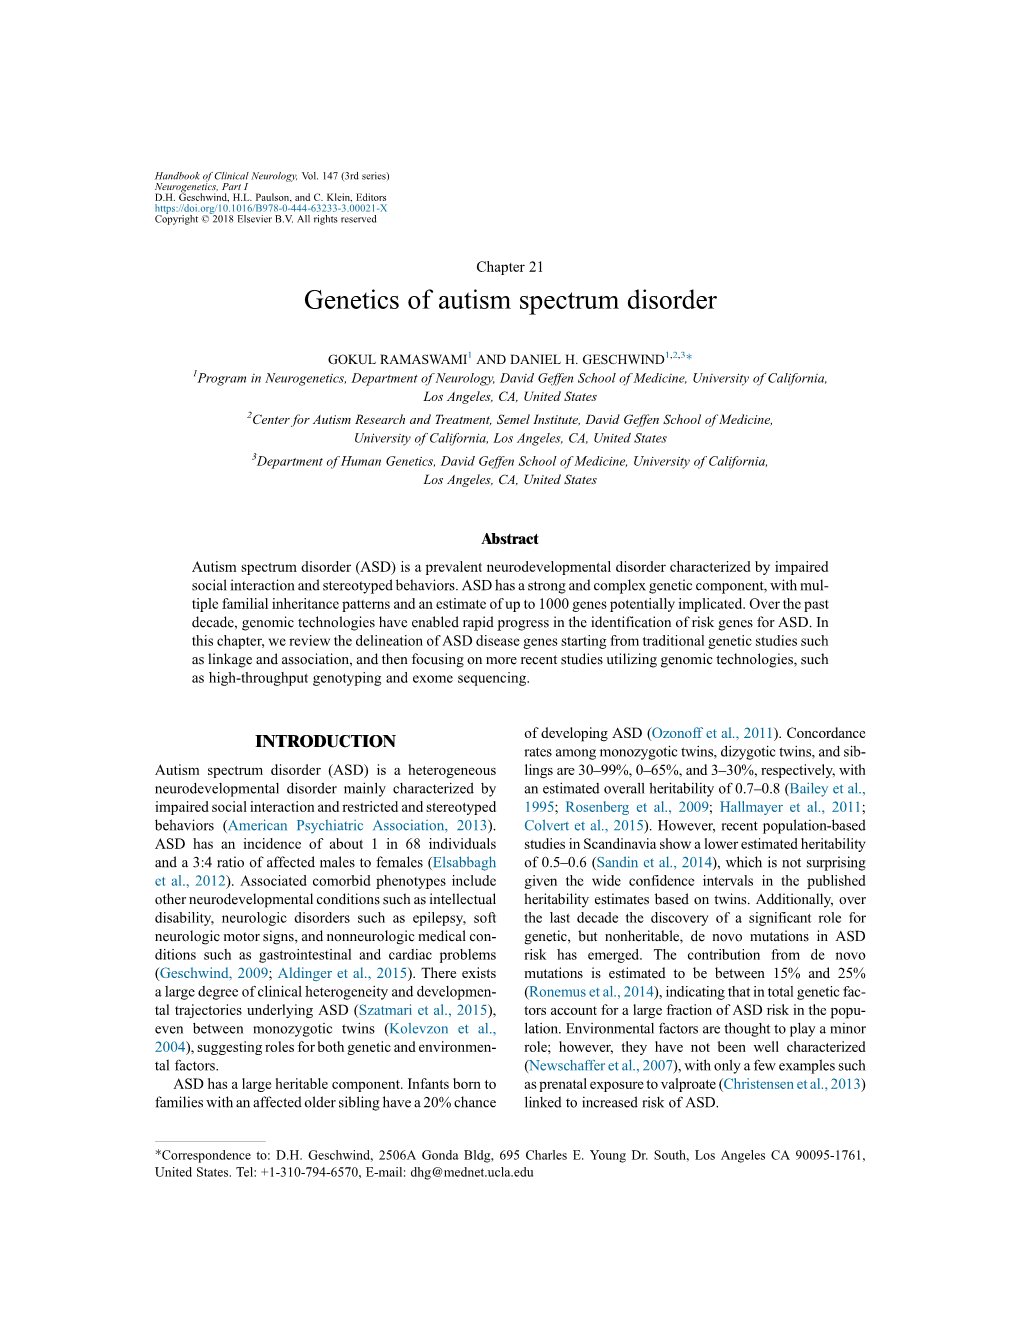 Genetics of Autism Spectrum Disorder